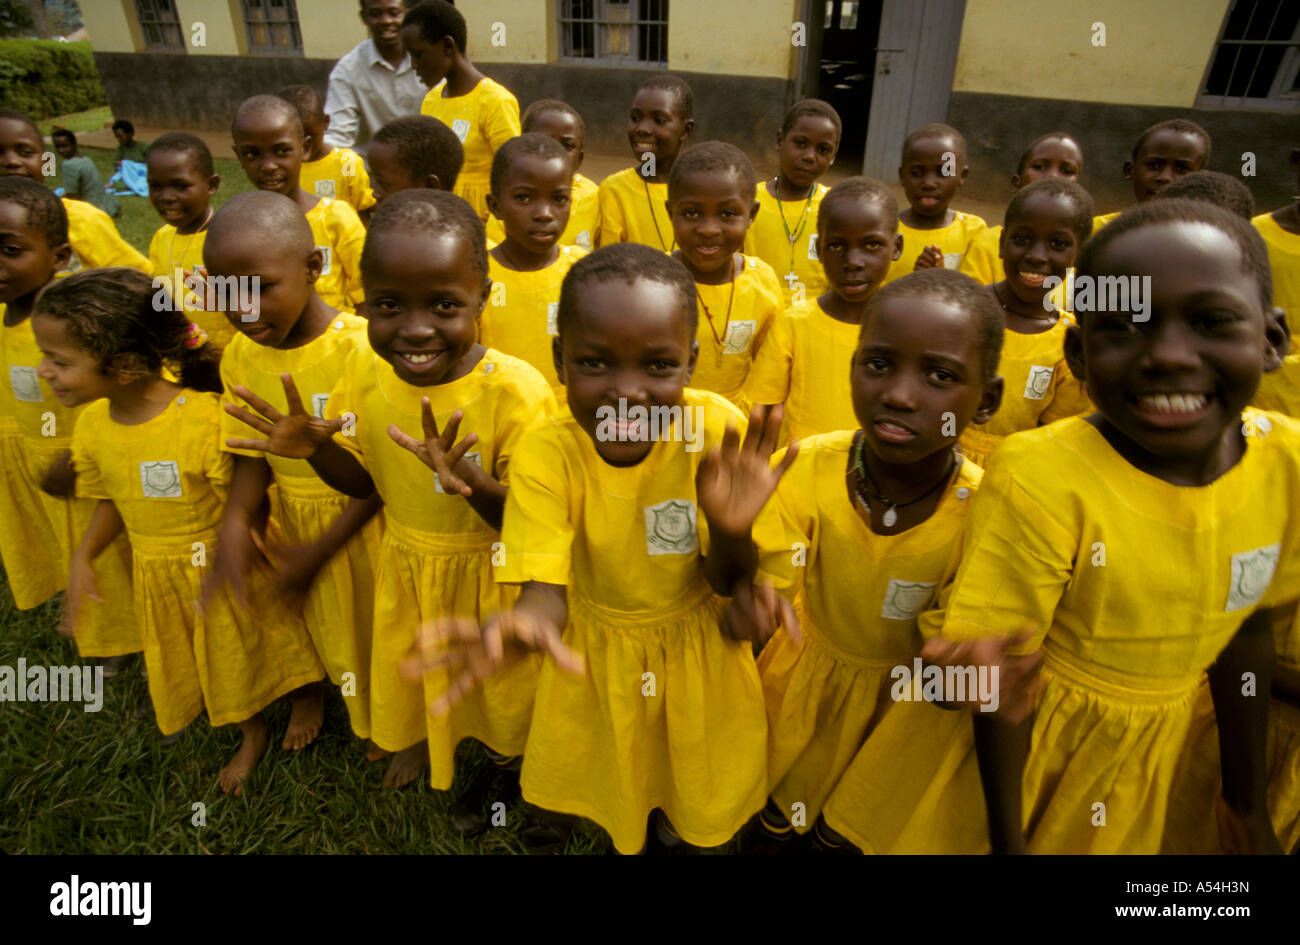 Painet hq1464 uganda primary school girls yellow uniforms singing dancing masaka children game happy images country Stock Photo